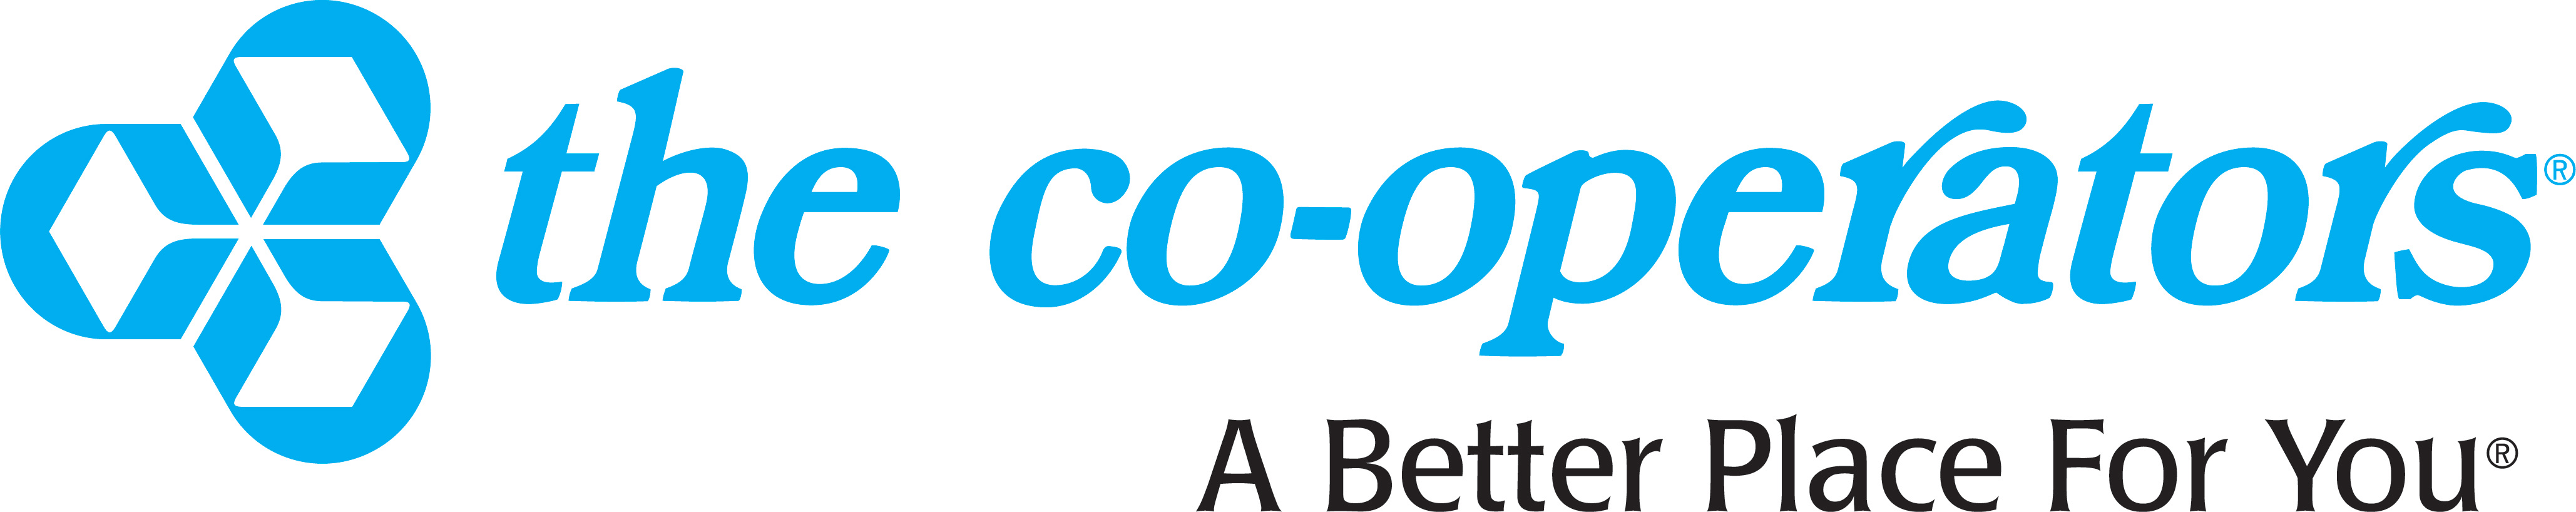 Cooperators Life Insurance Company Contact Us